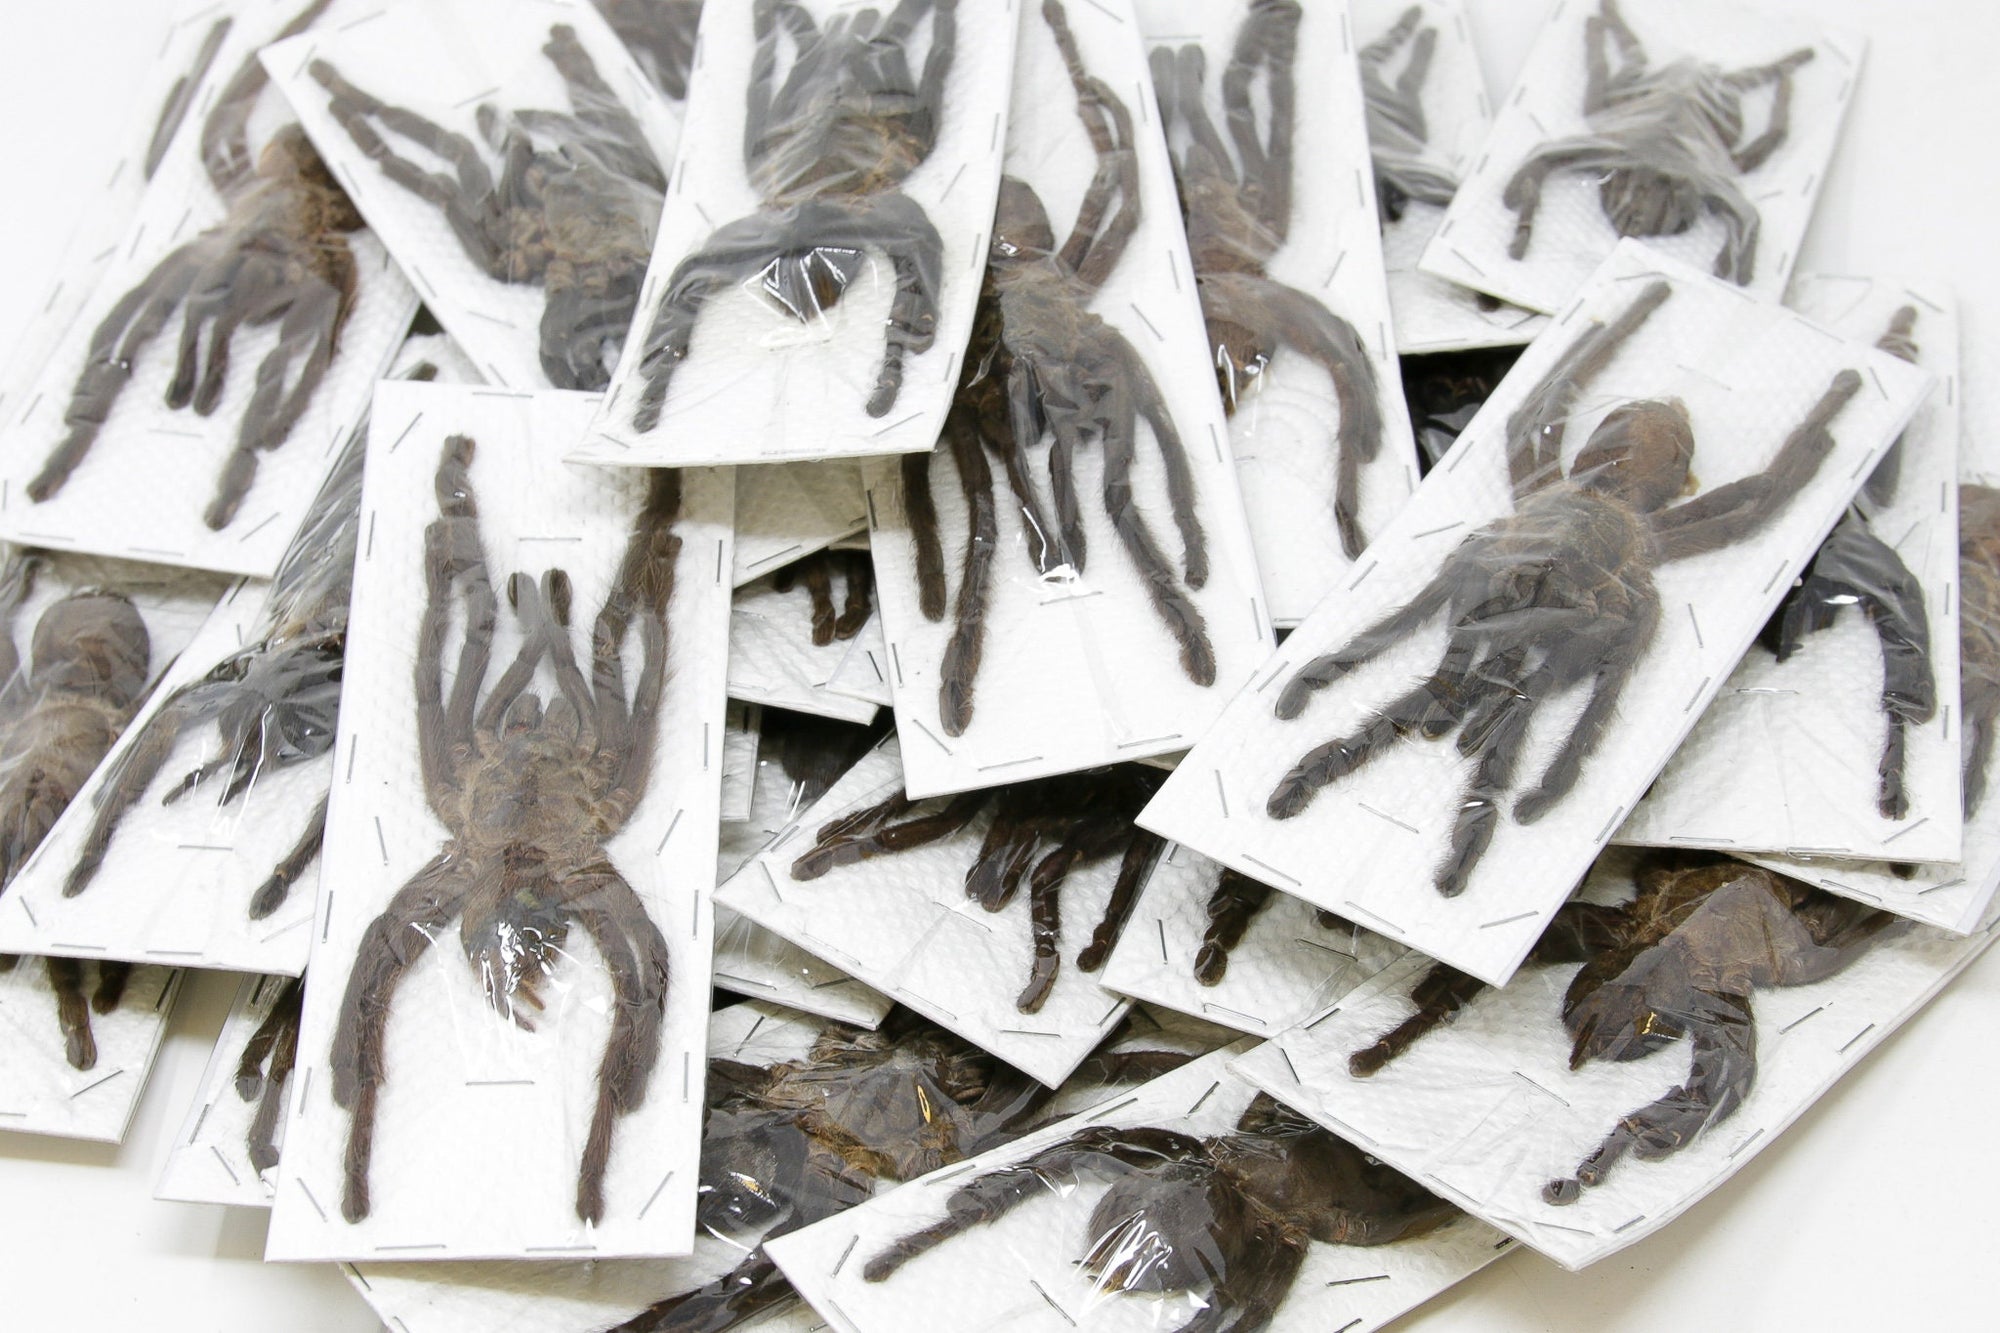 2 x EXTRA LARGE Thai Bird-eating Tarantulas, Cyriopagopus minax, 140mm+ A1 Haplopelma Tarantula Spider Specimens, Arachnids, Entomology